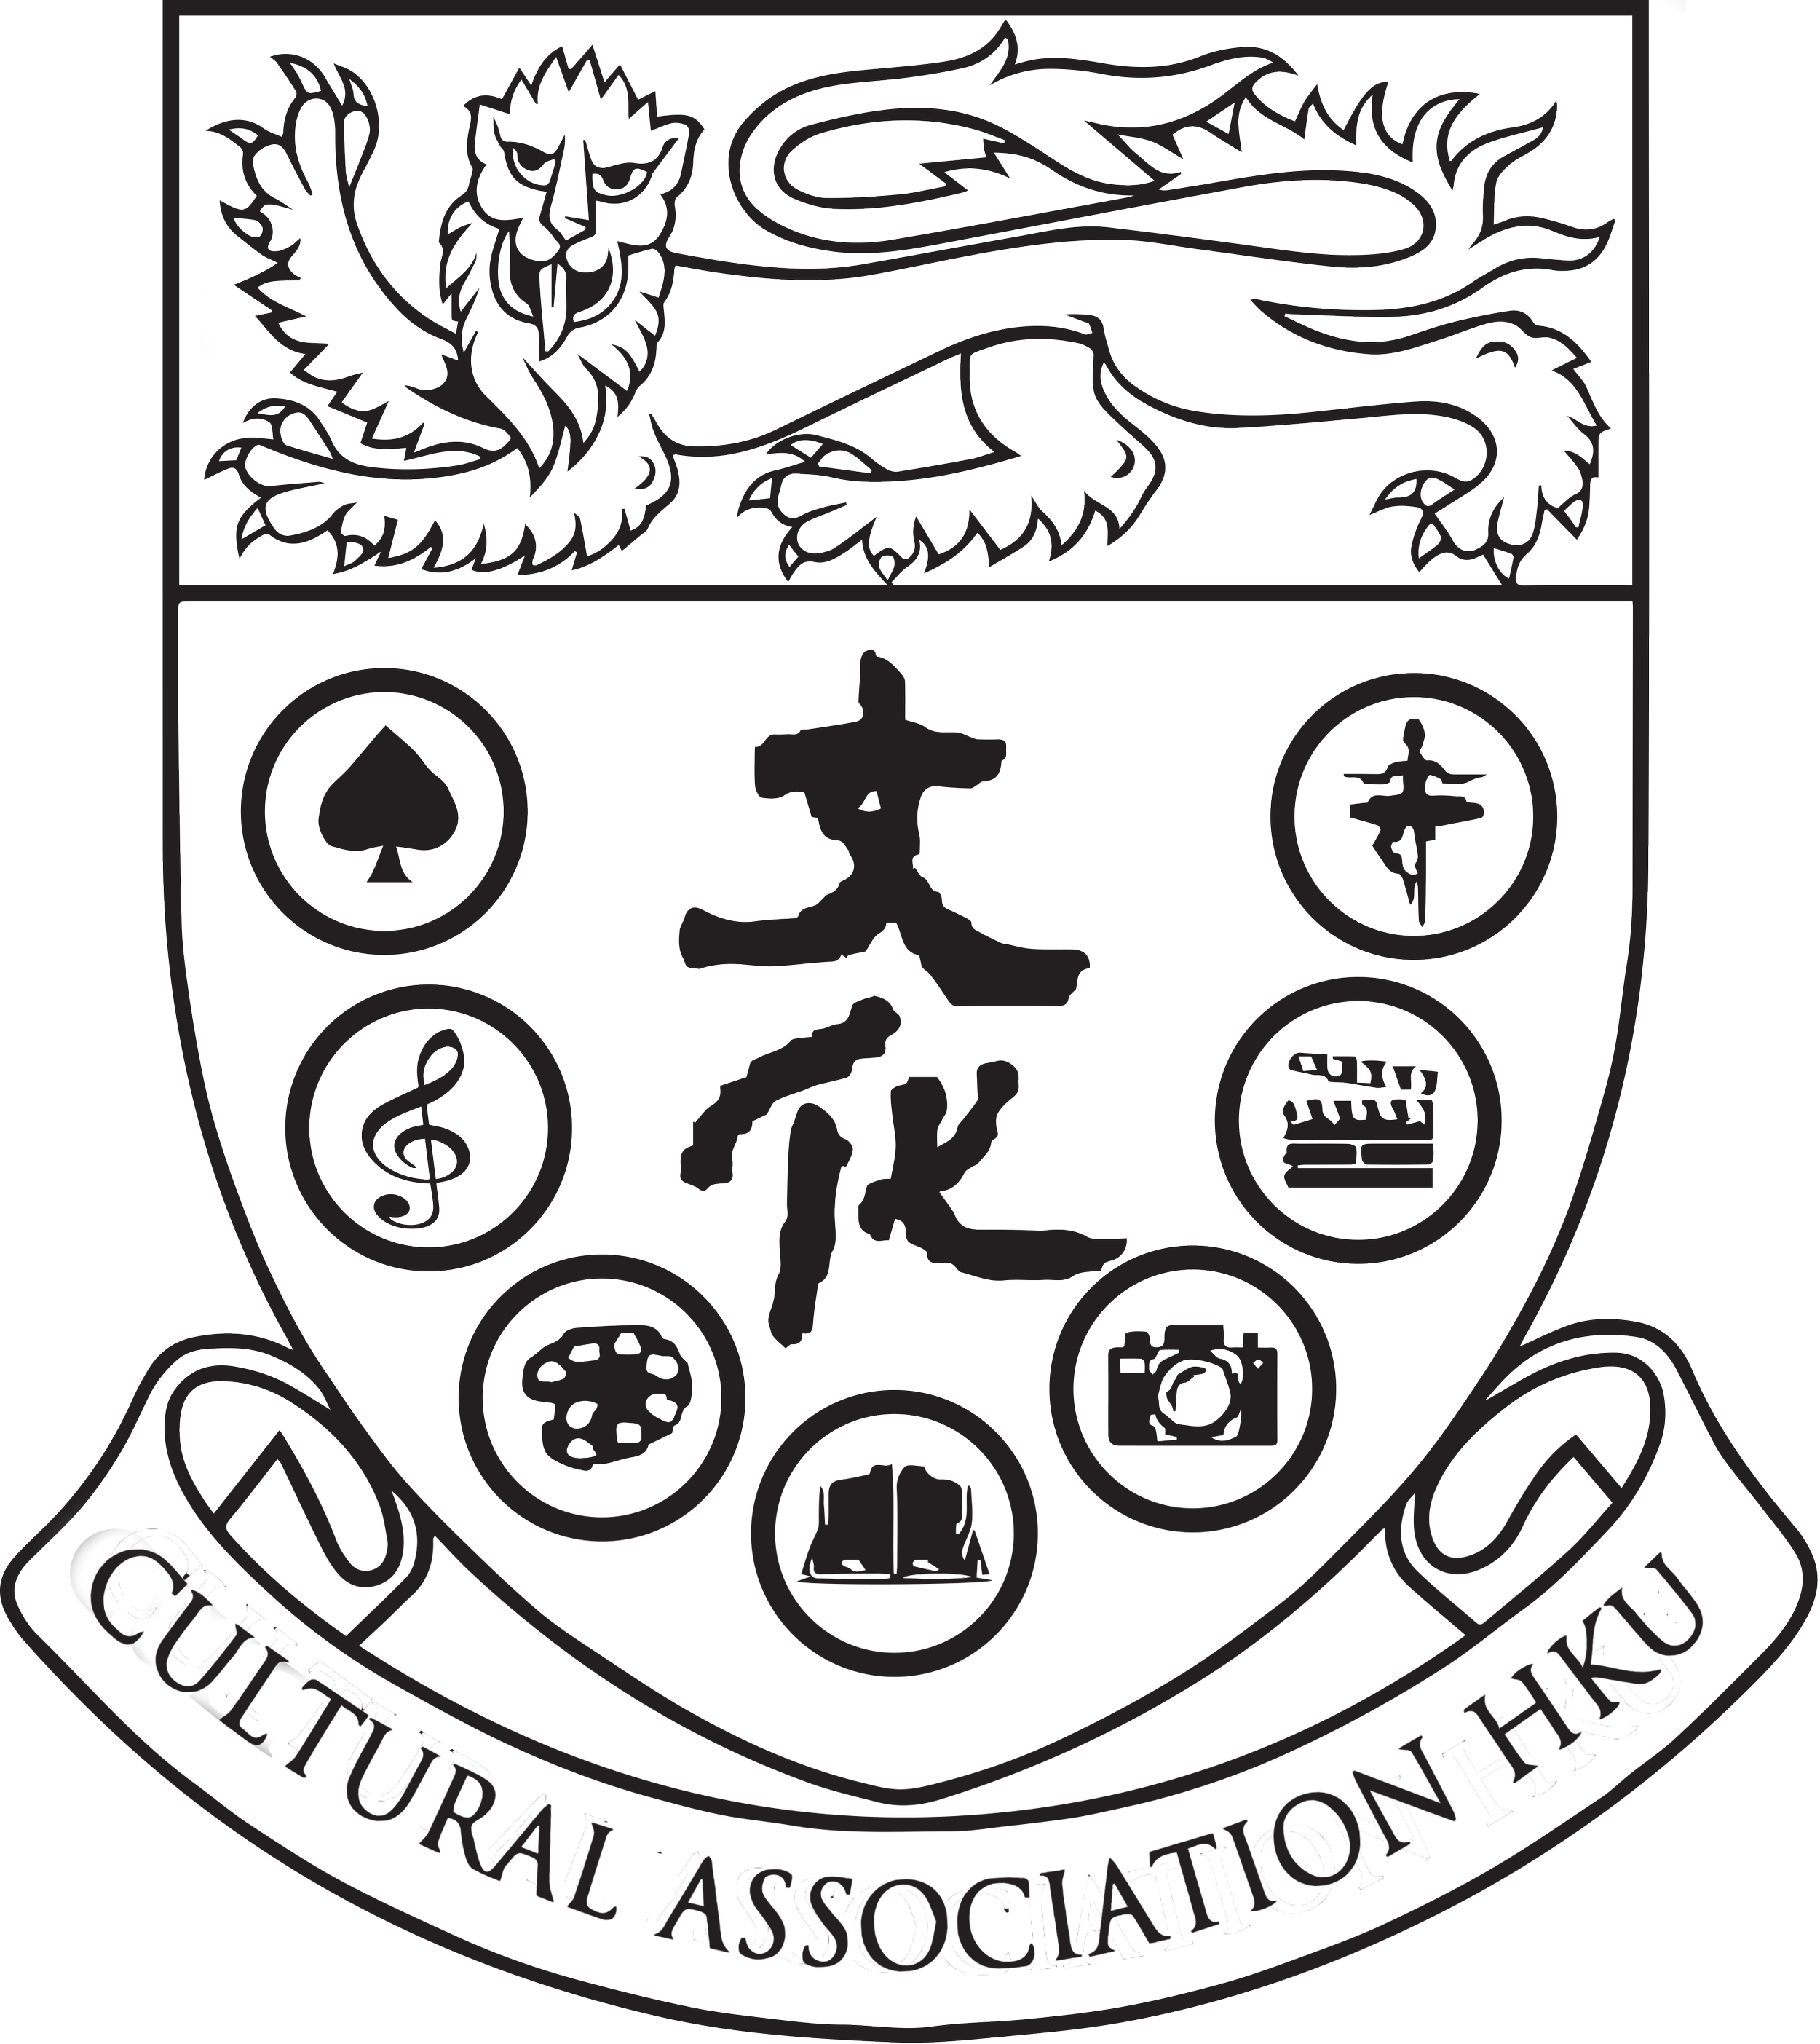 Cultural Association, HKU